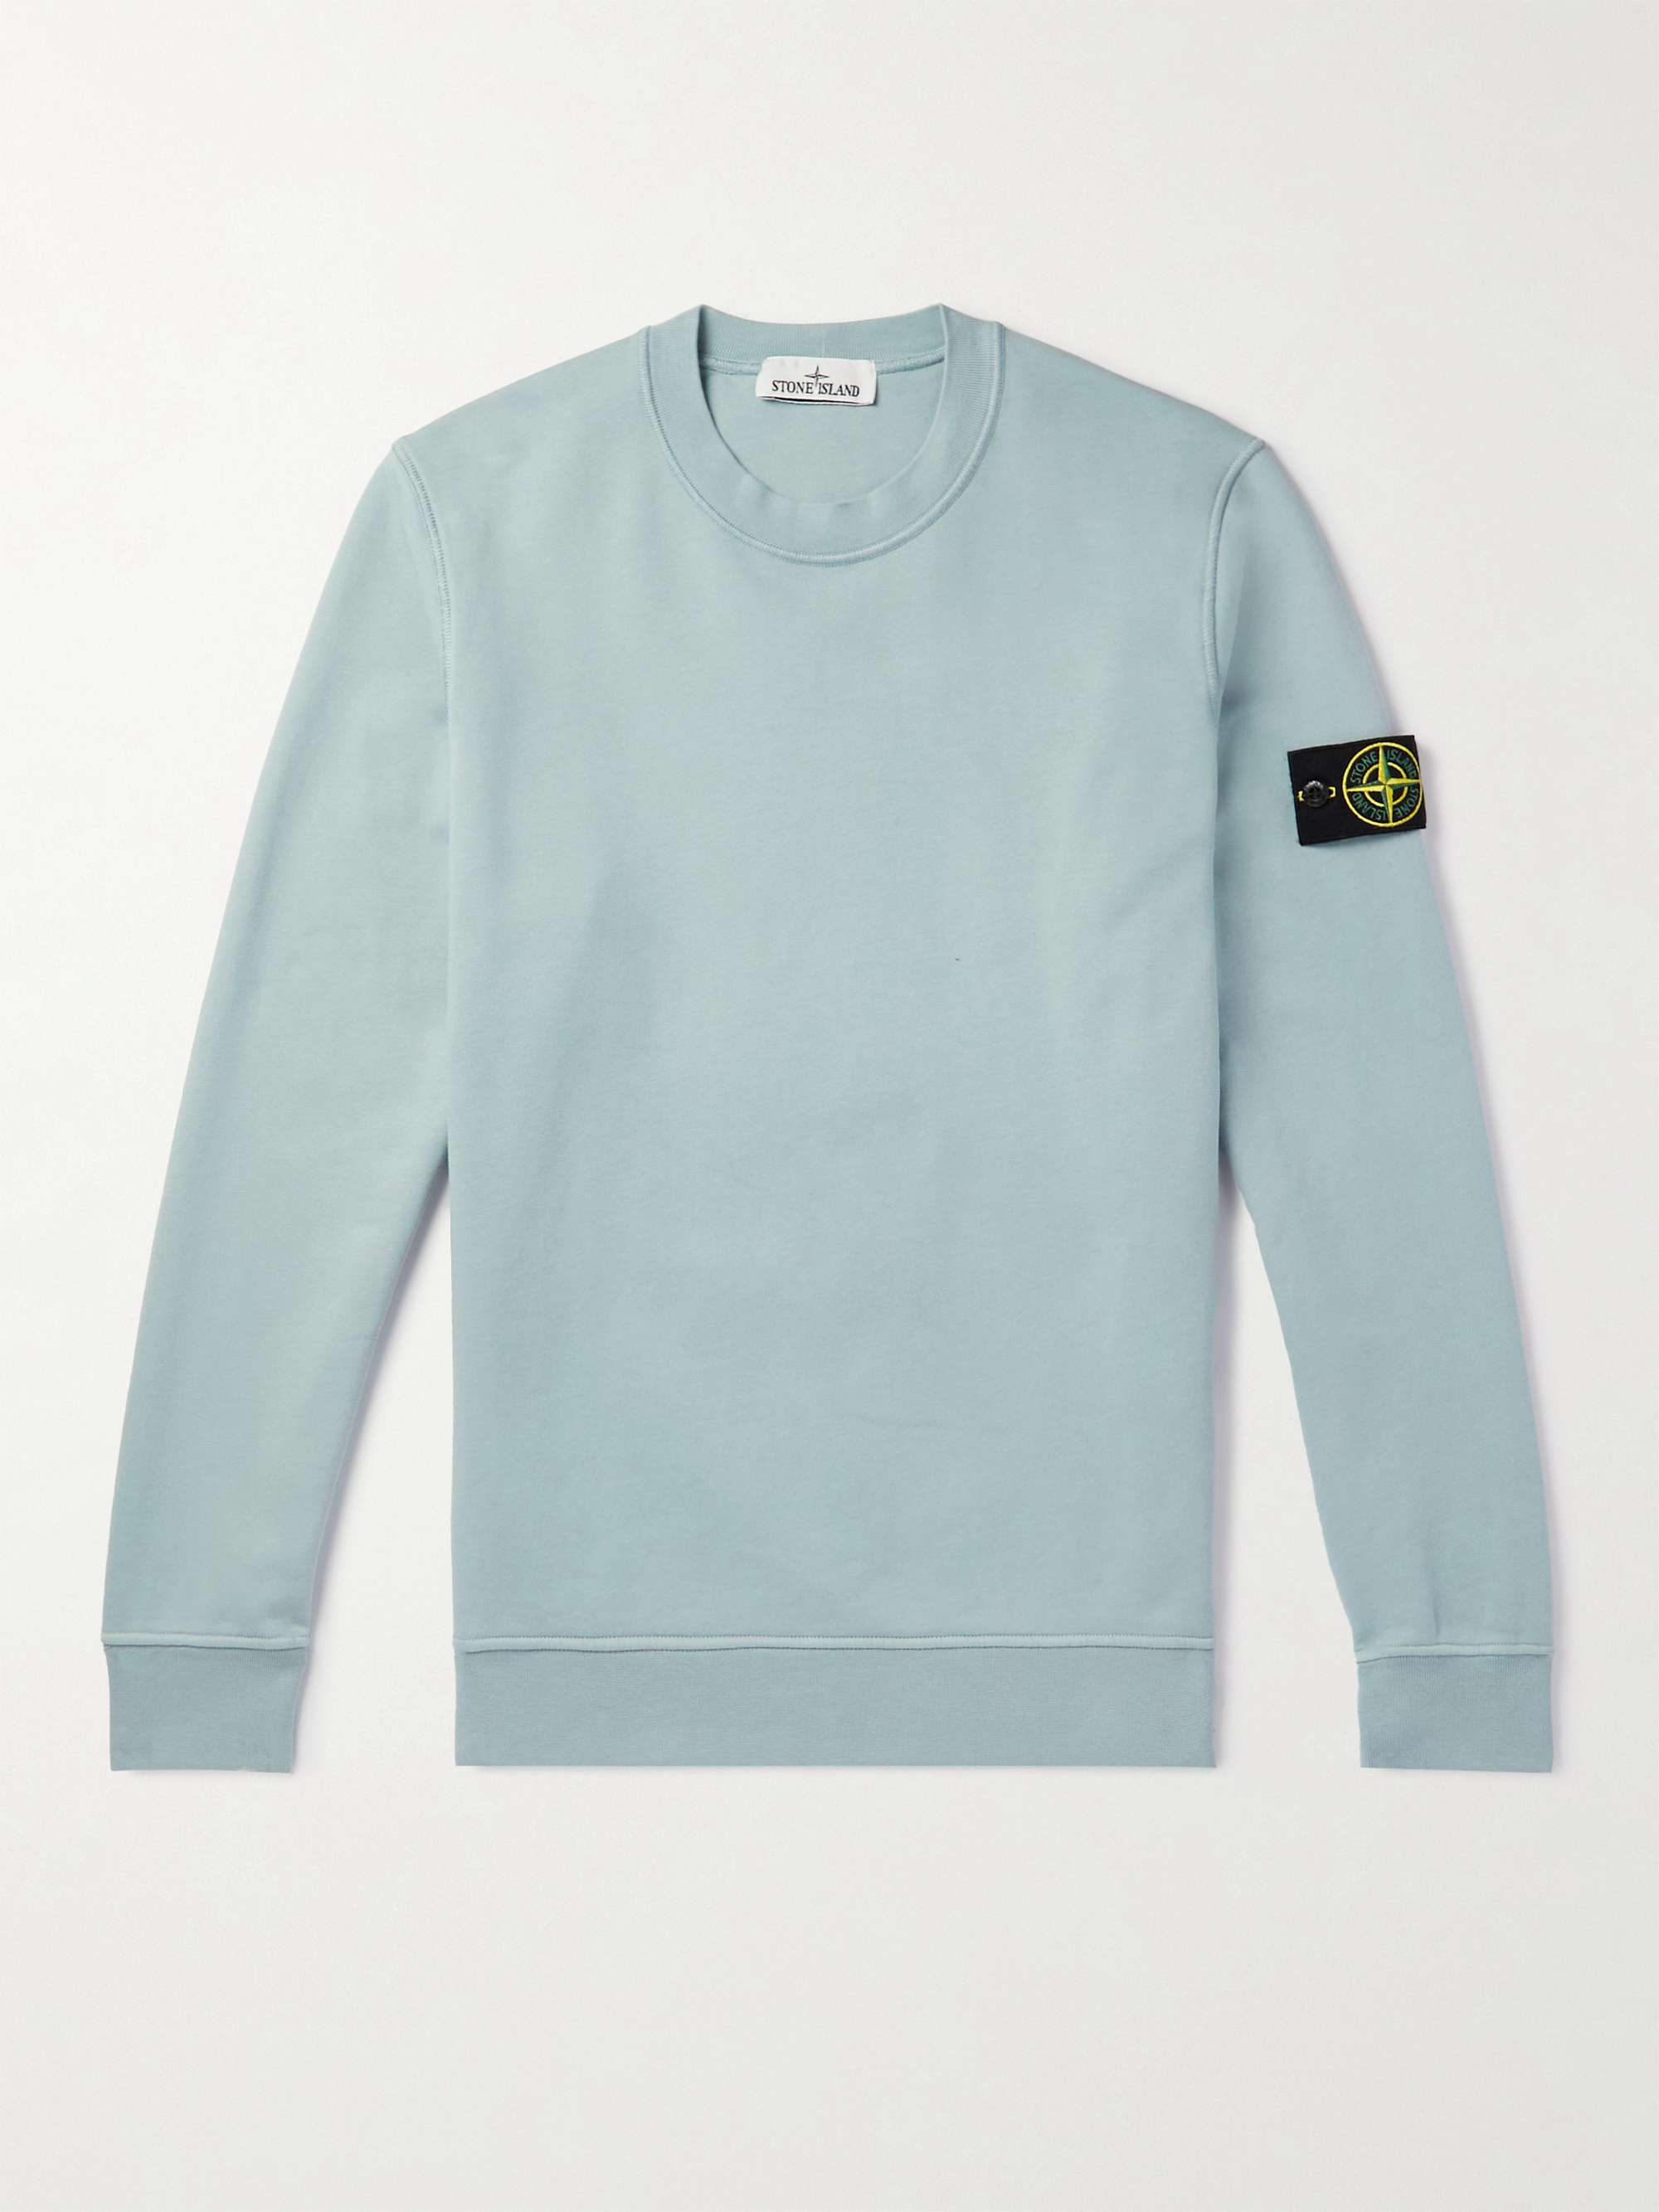 STONE ISLAND Logo-Appliqued Garment-Dyed Cotton-Jersey Sweatshirt,Blue